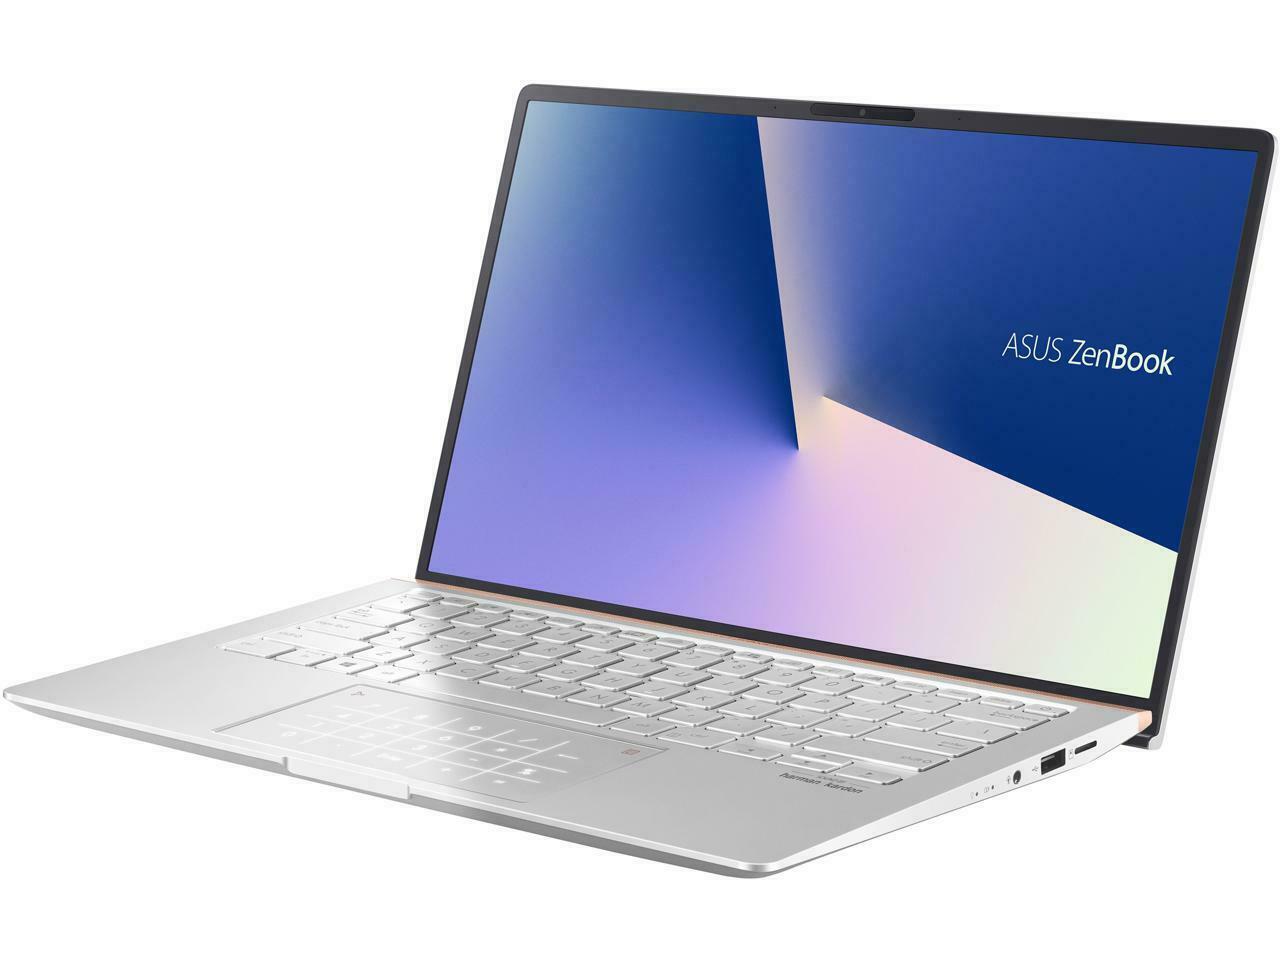 ASUS ZenBook 14 Ultra-Slim Laptop 14" Full HD 4-Way NanoEdge Bezel, AMD R7 3700U CPU, 8 GB RAM, 512 GB PCIe SSD, NumberPad, Windows 10 - UM433DA-DH75, Icicle Silver - image 1 of 2